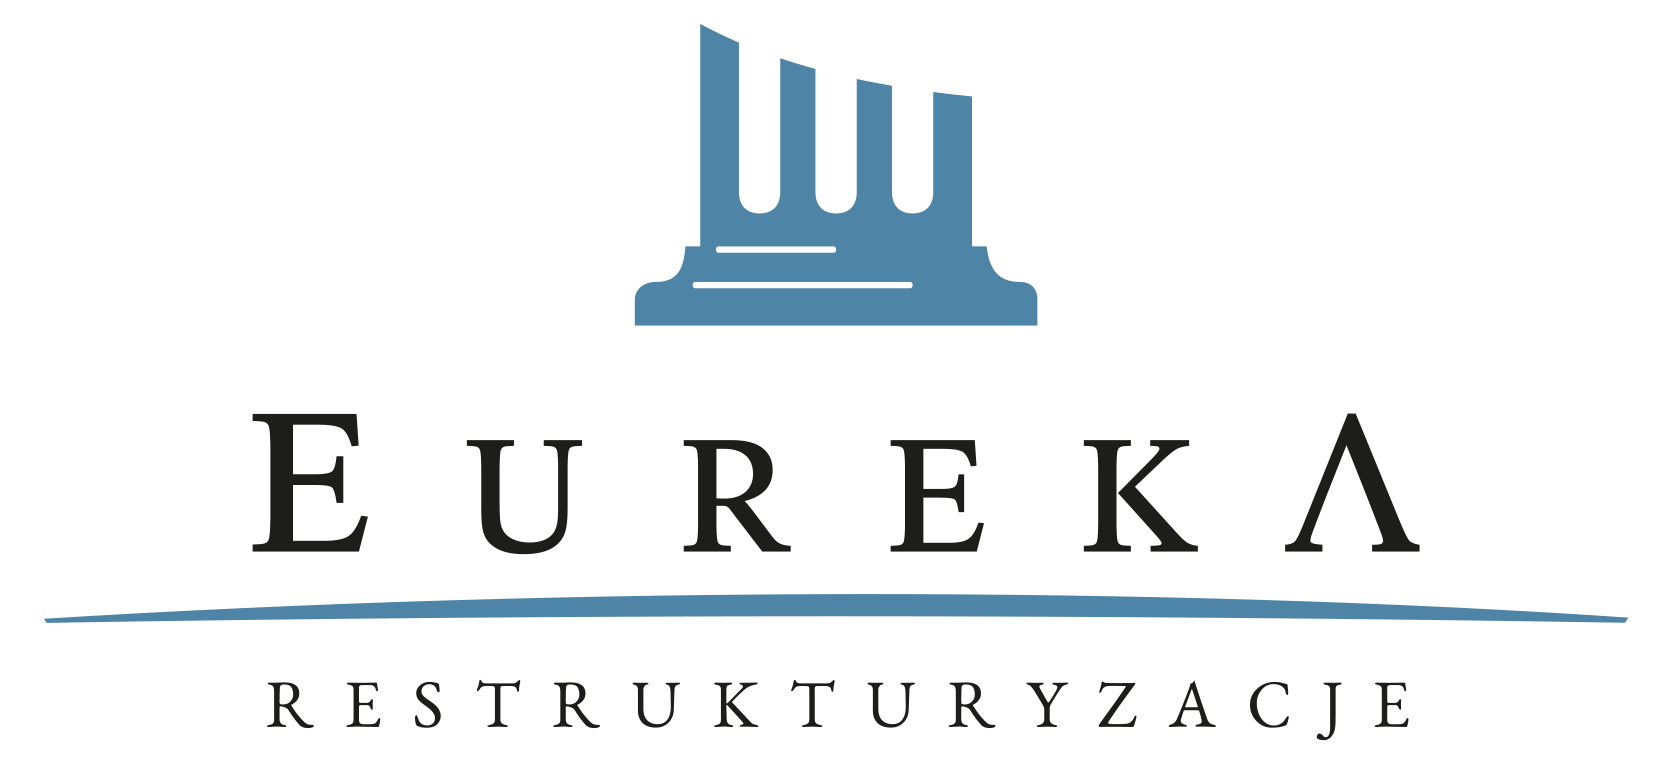 Eureka Restrukturyzacje